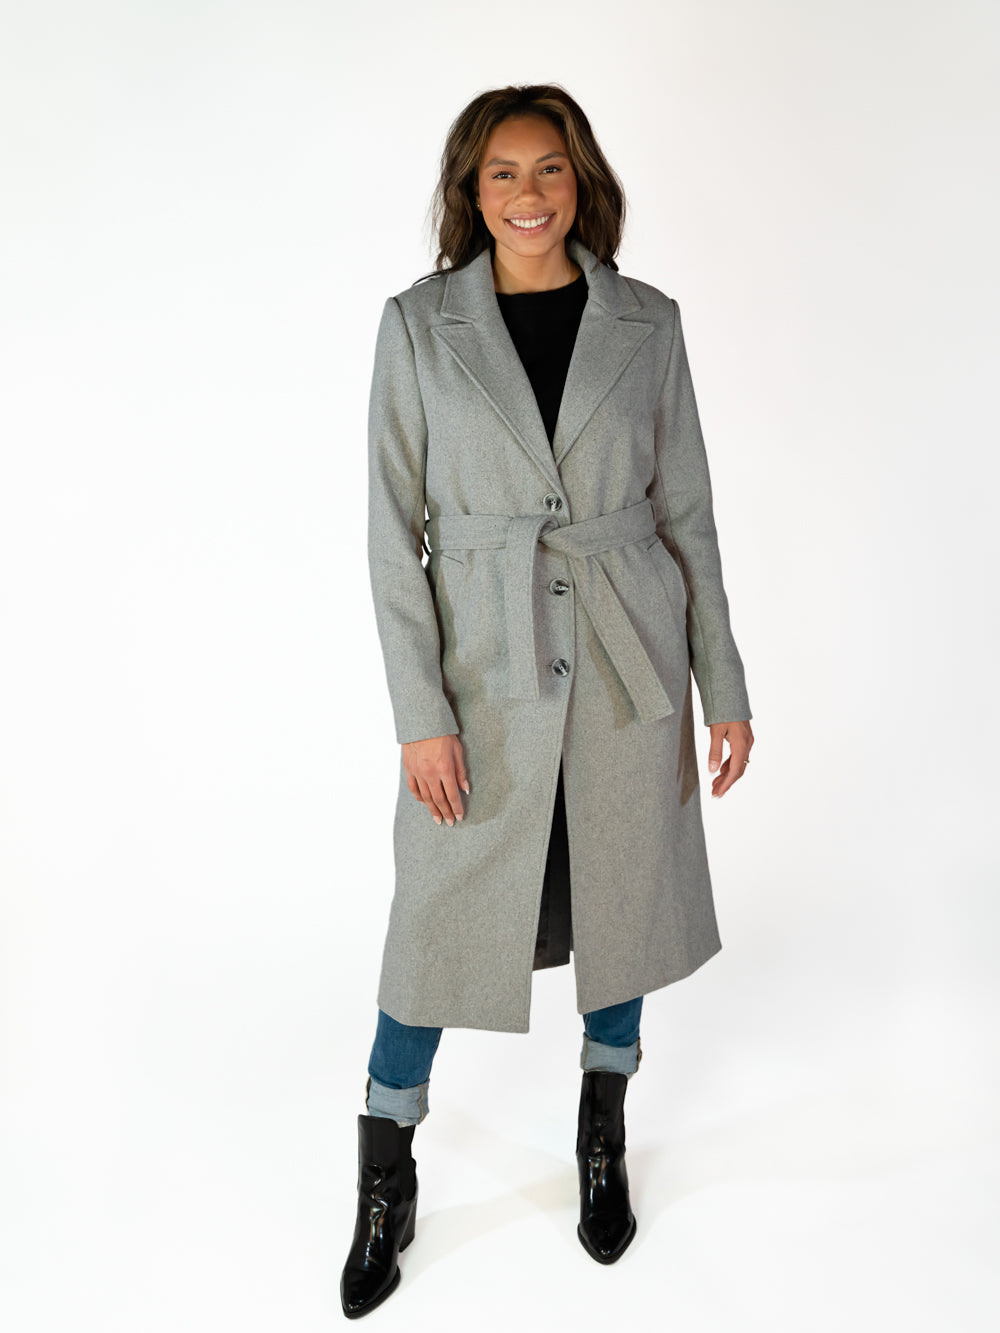 Winter Dress Coat for Tall Women